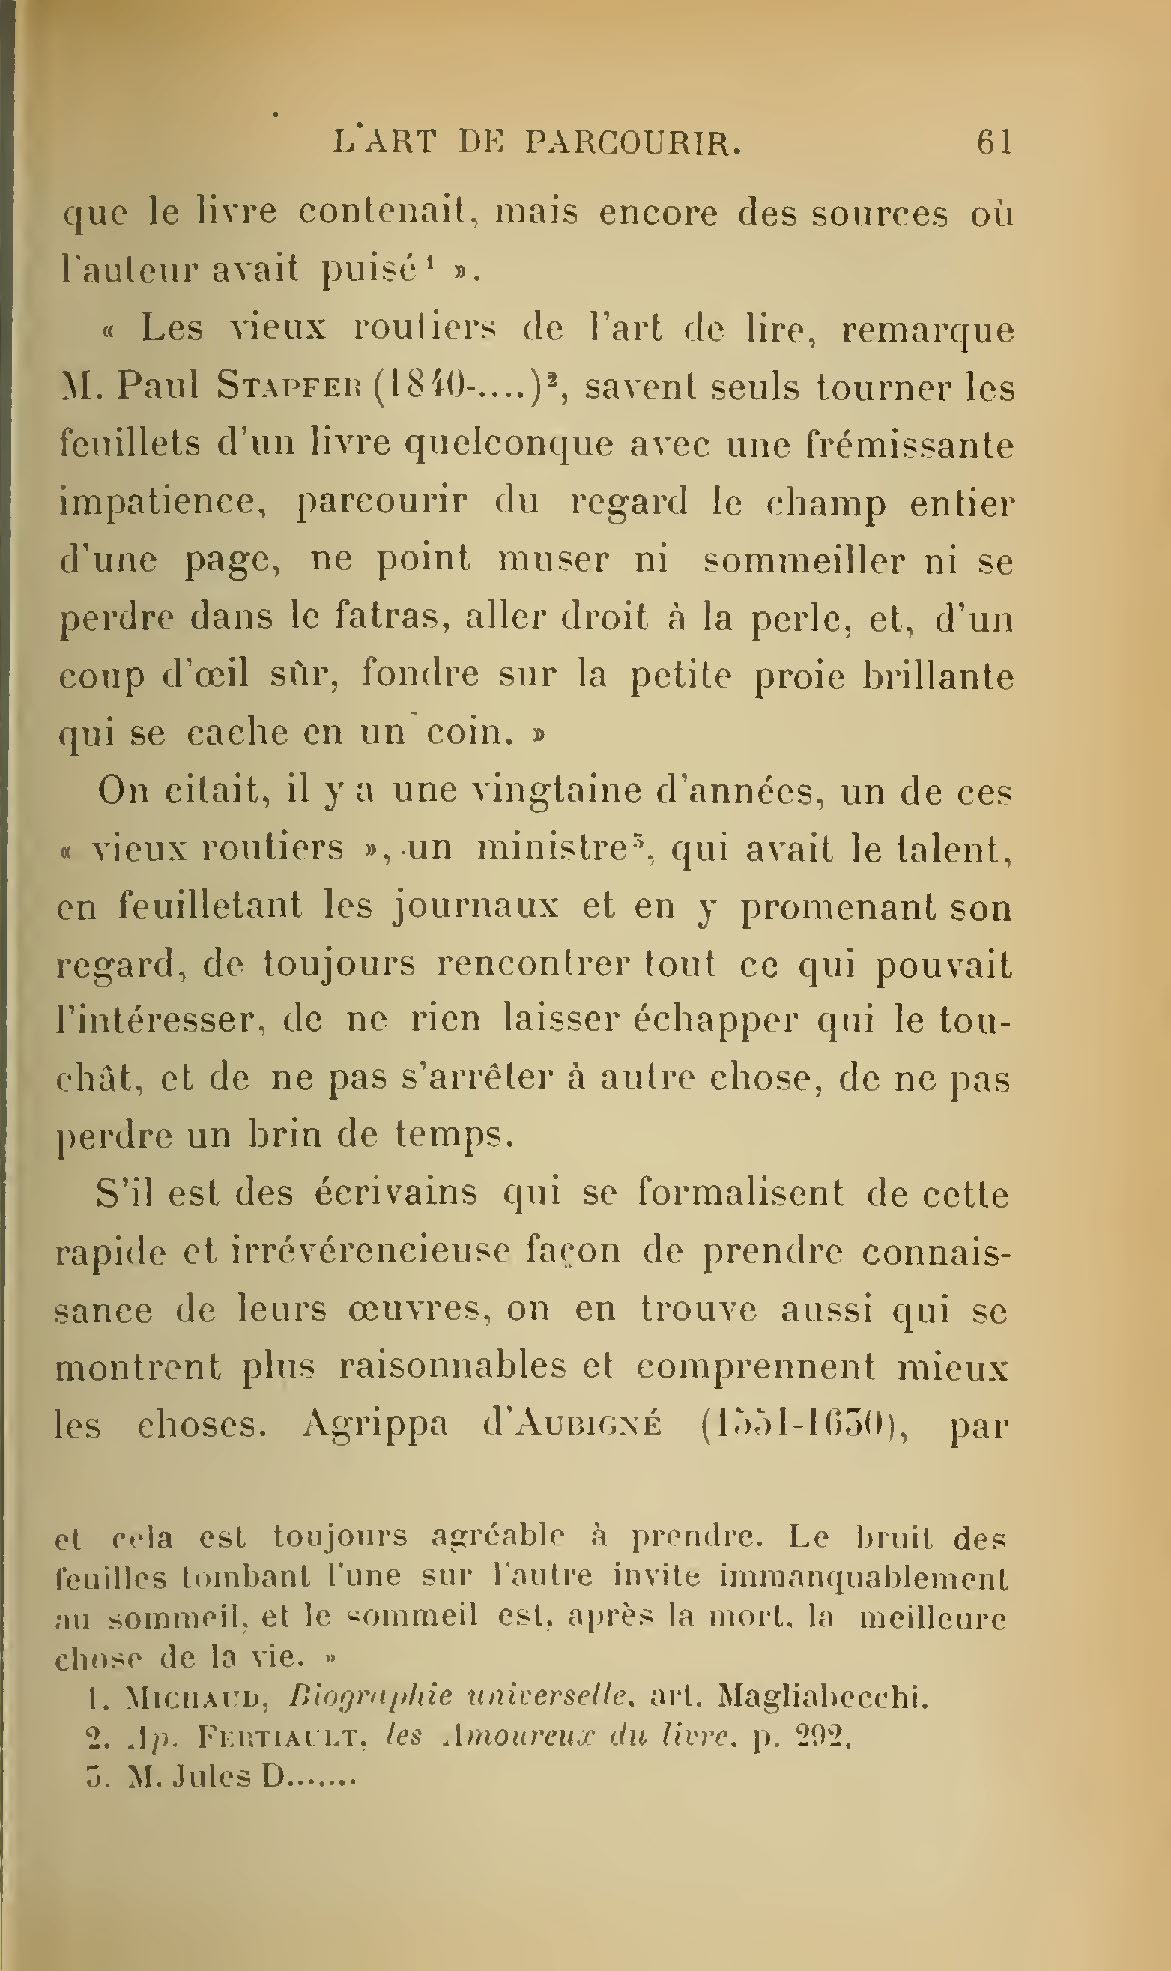 Albert Cim, Le Livre, t. II, p. 061.